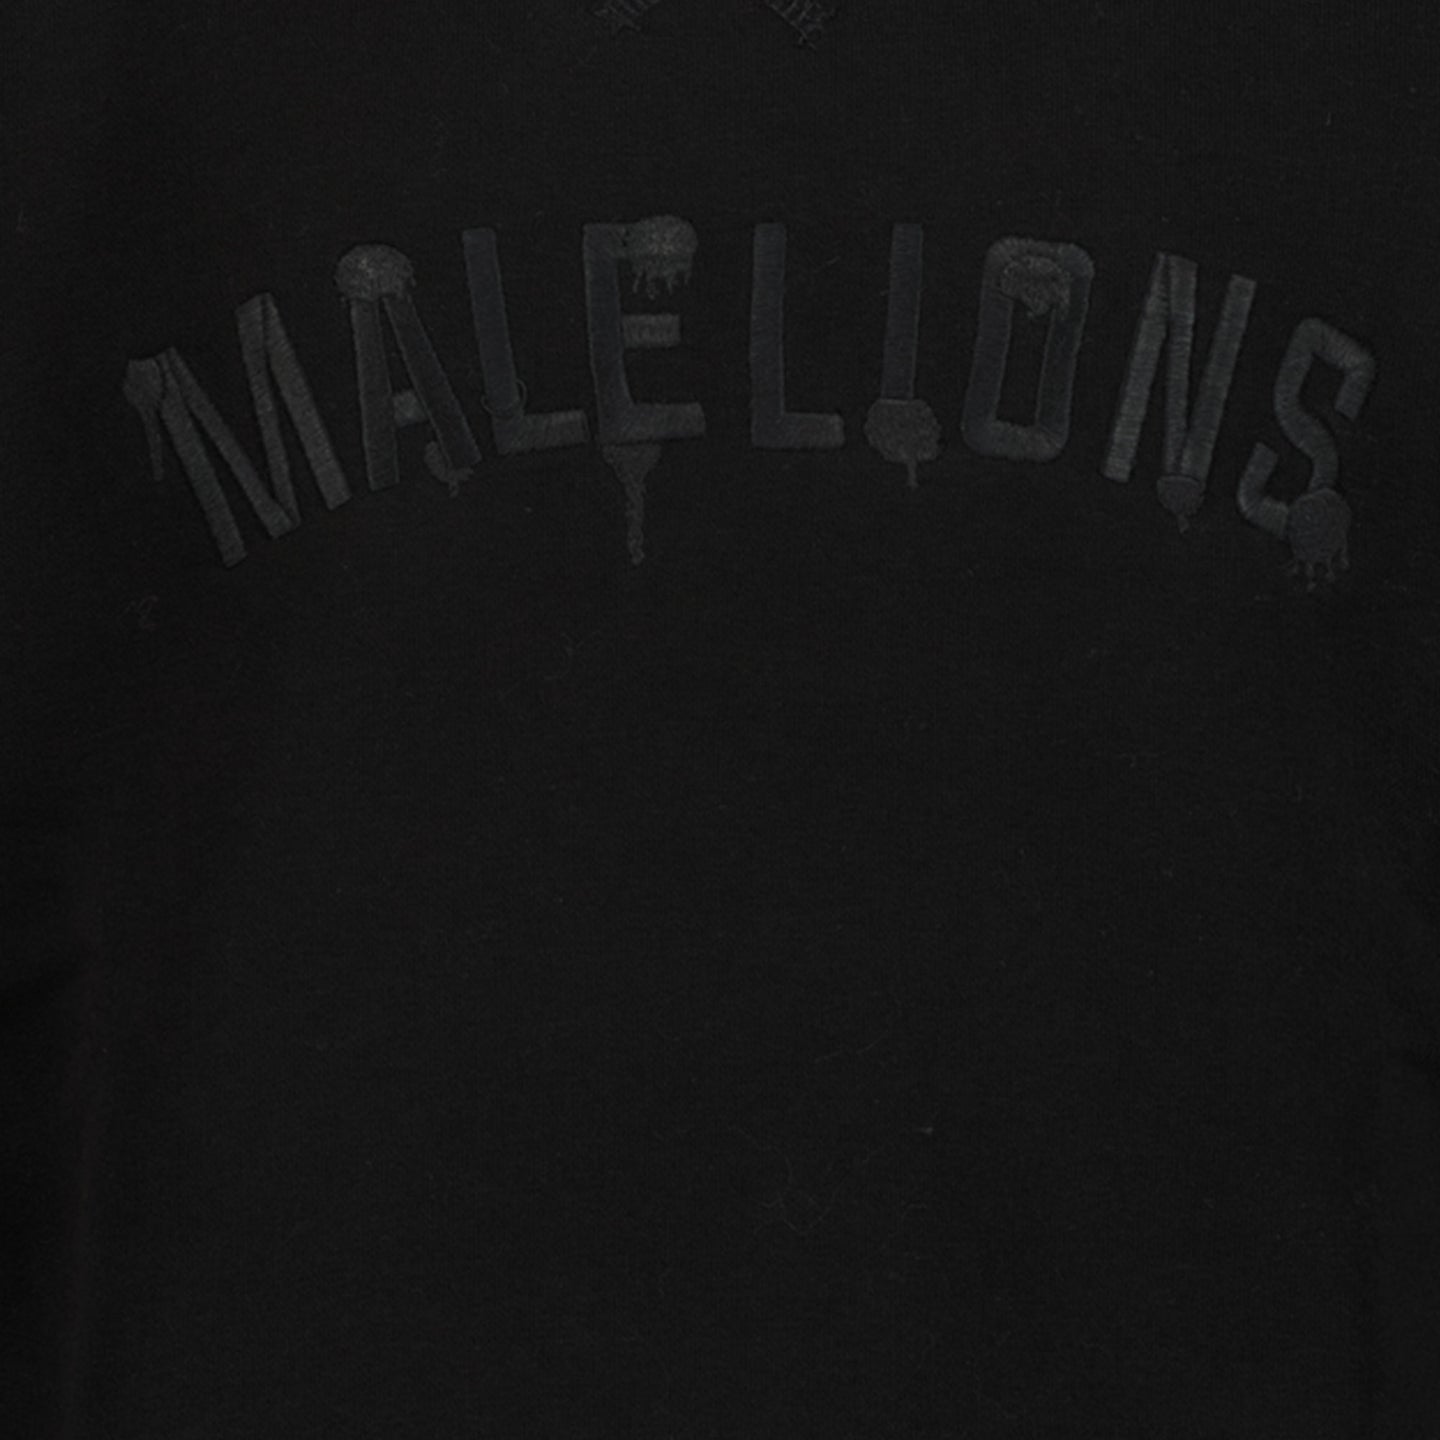 Malelions unisex suéter negro